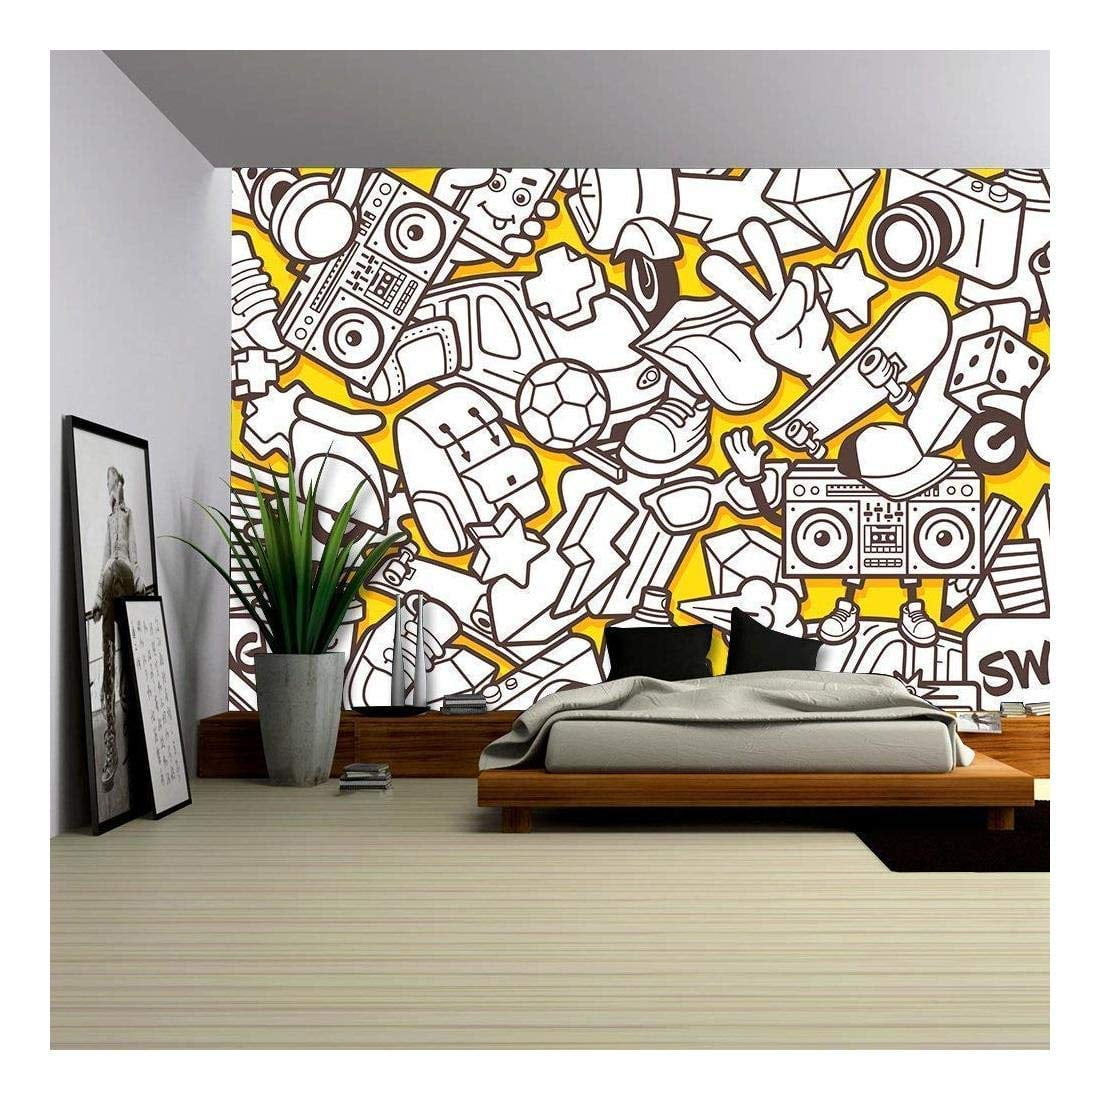 Share more than 52 graffiti peel and stick wallpaper  incdgdbentre